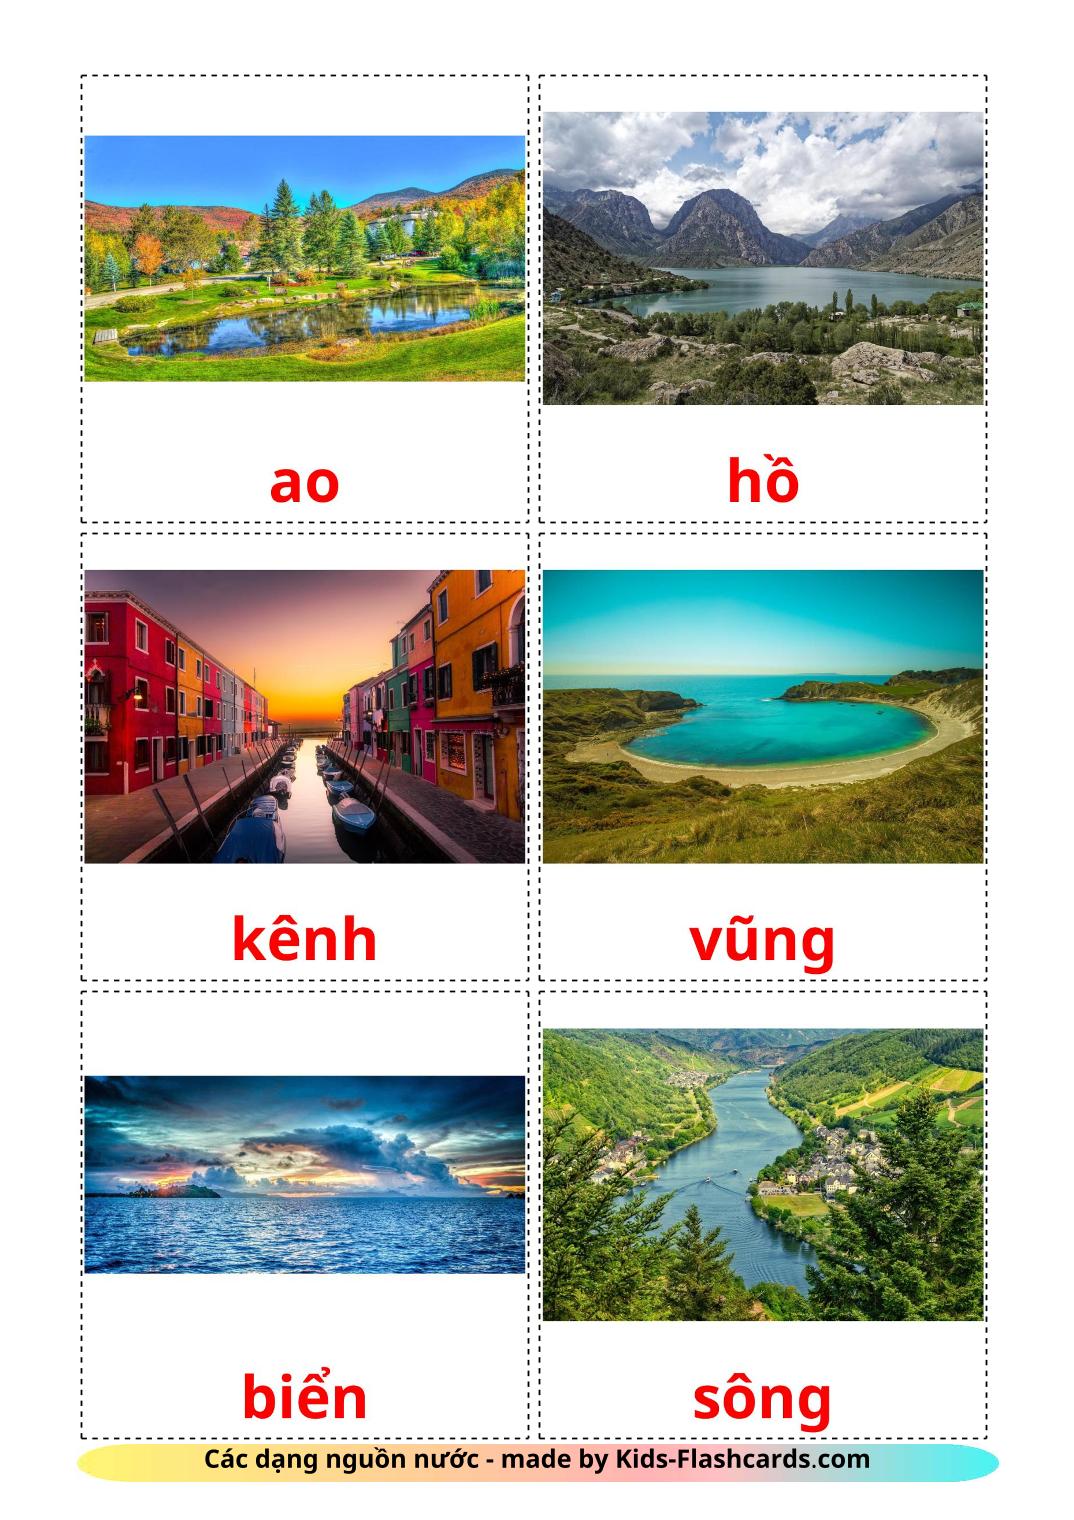 Corpi d'acqua - 30 flashcards vietnamita stampabili gratuitamente